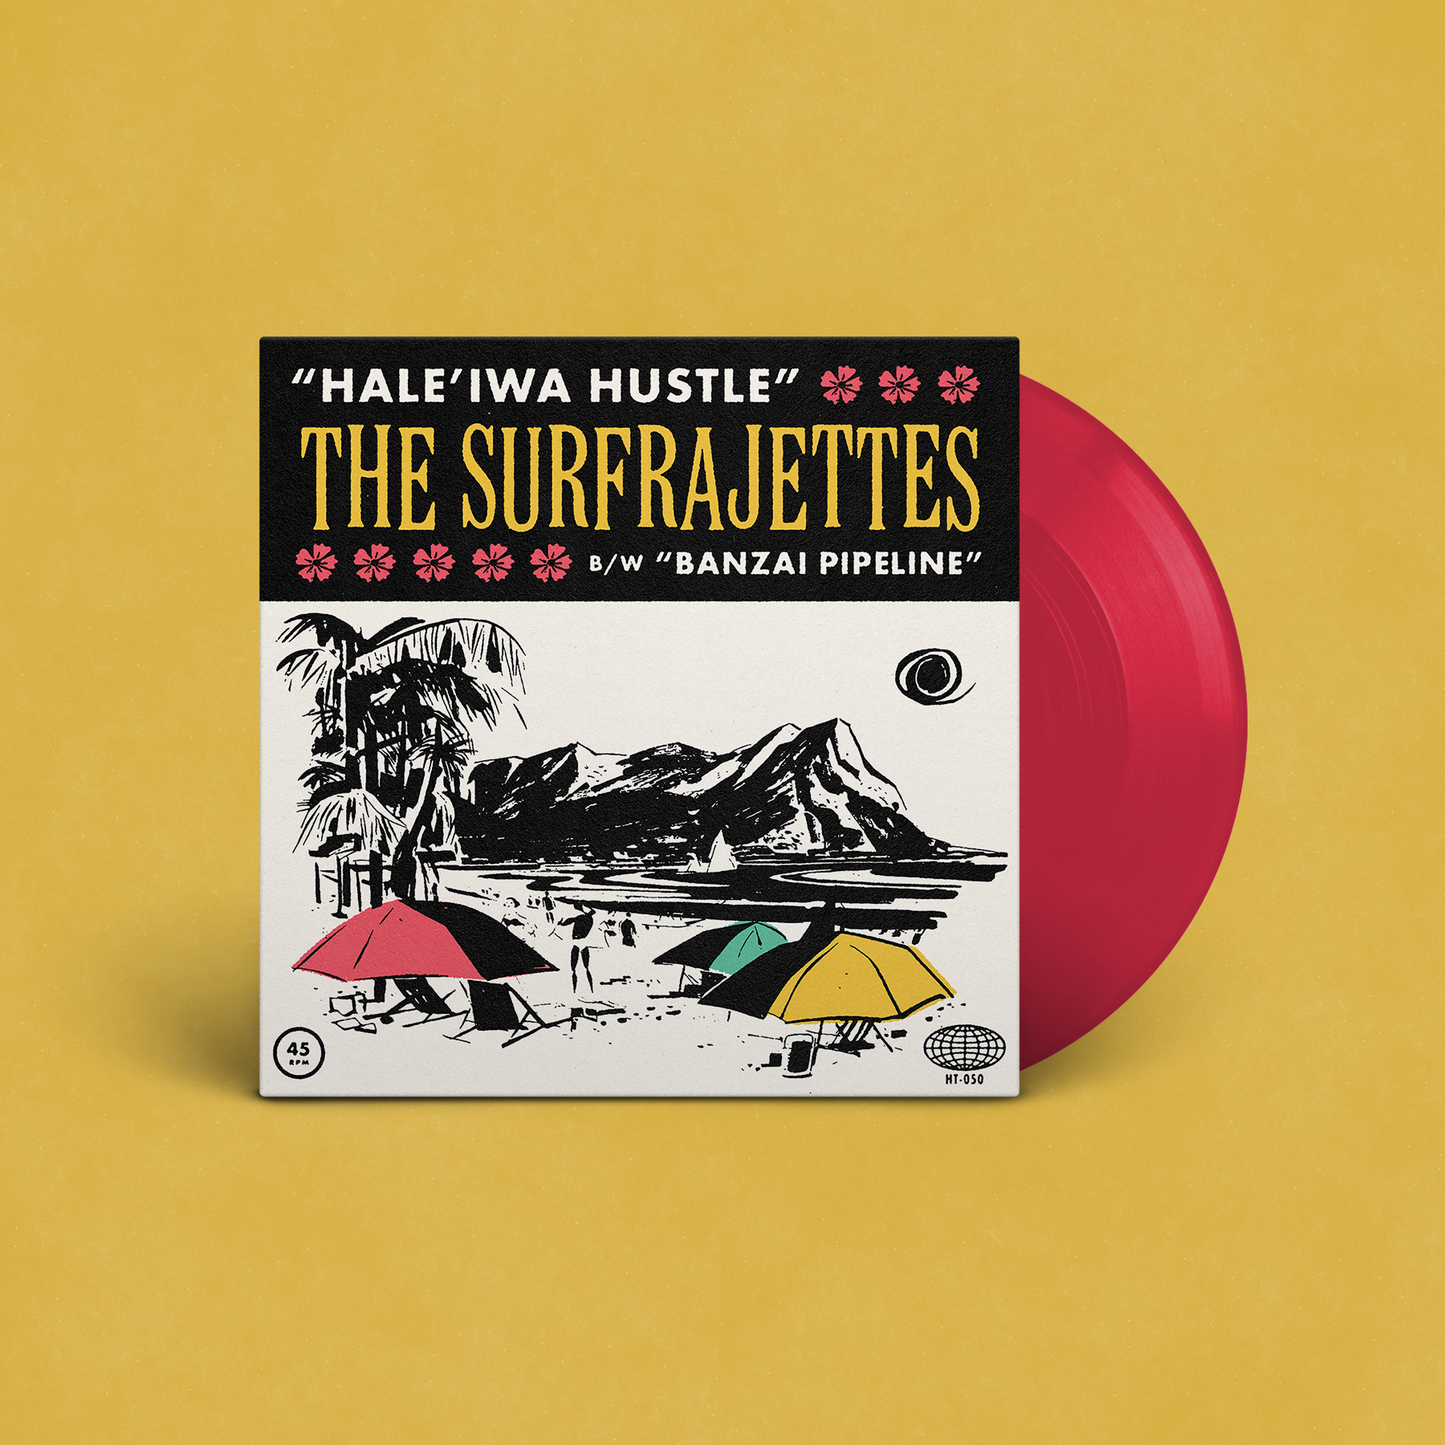 The Surfrajettes “Hale’iwa Hustle / Banzai Pipeline” Single